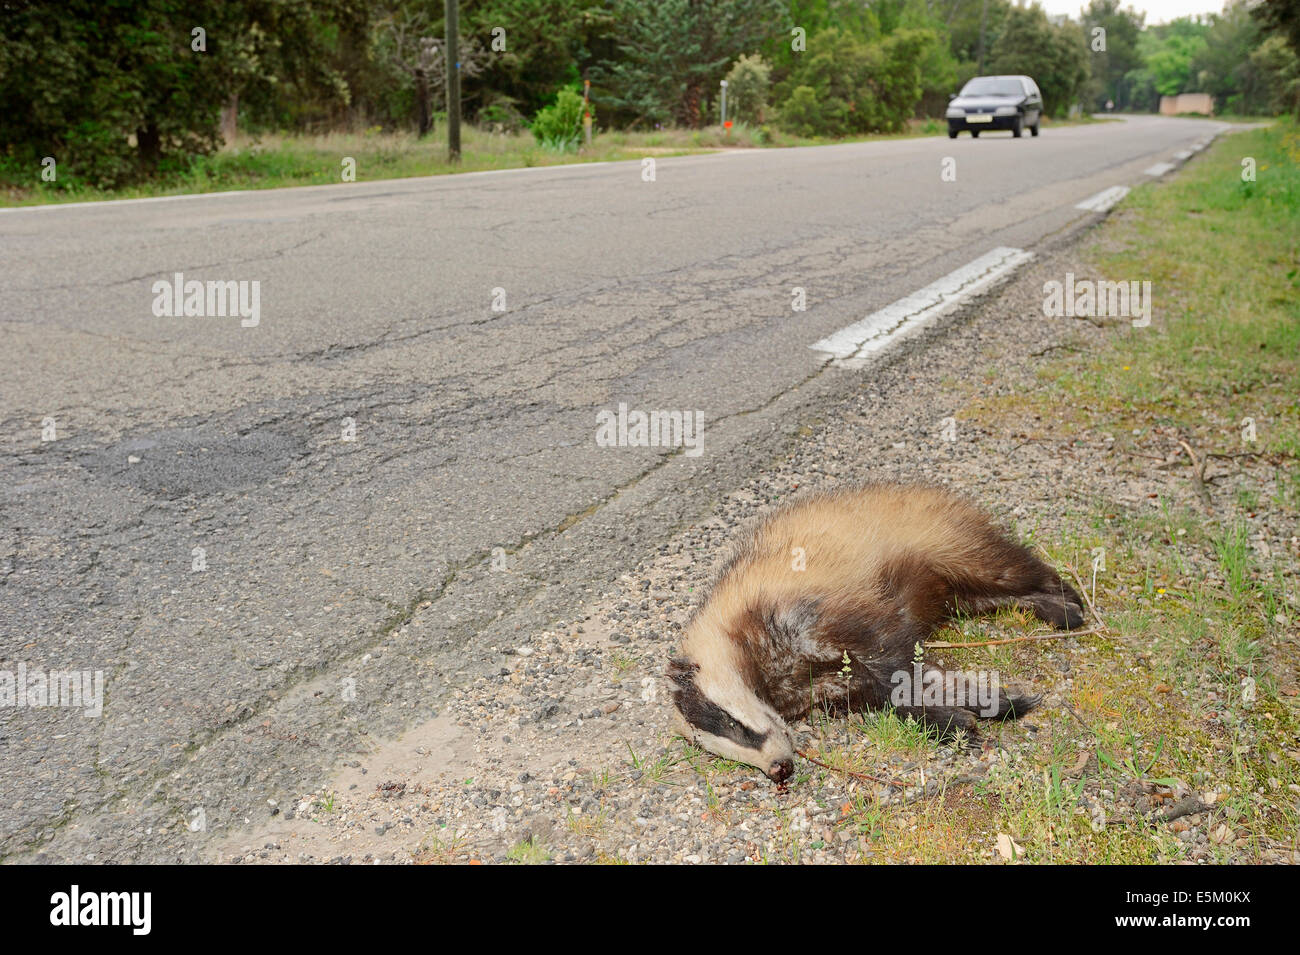 Morto (Badger Meles meles) accanto alla strada, Provenza, Francia meridionale Foto Stock